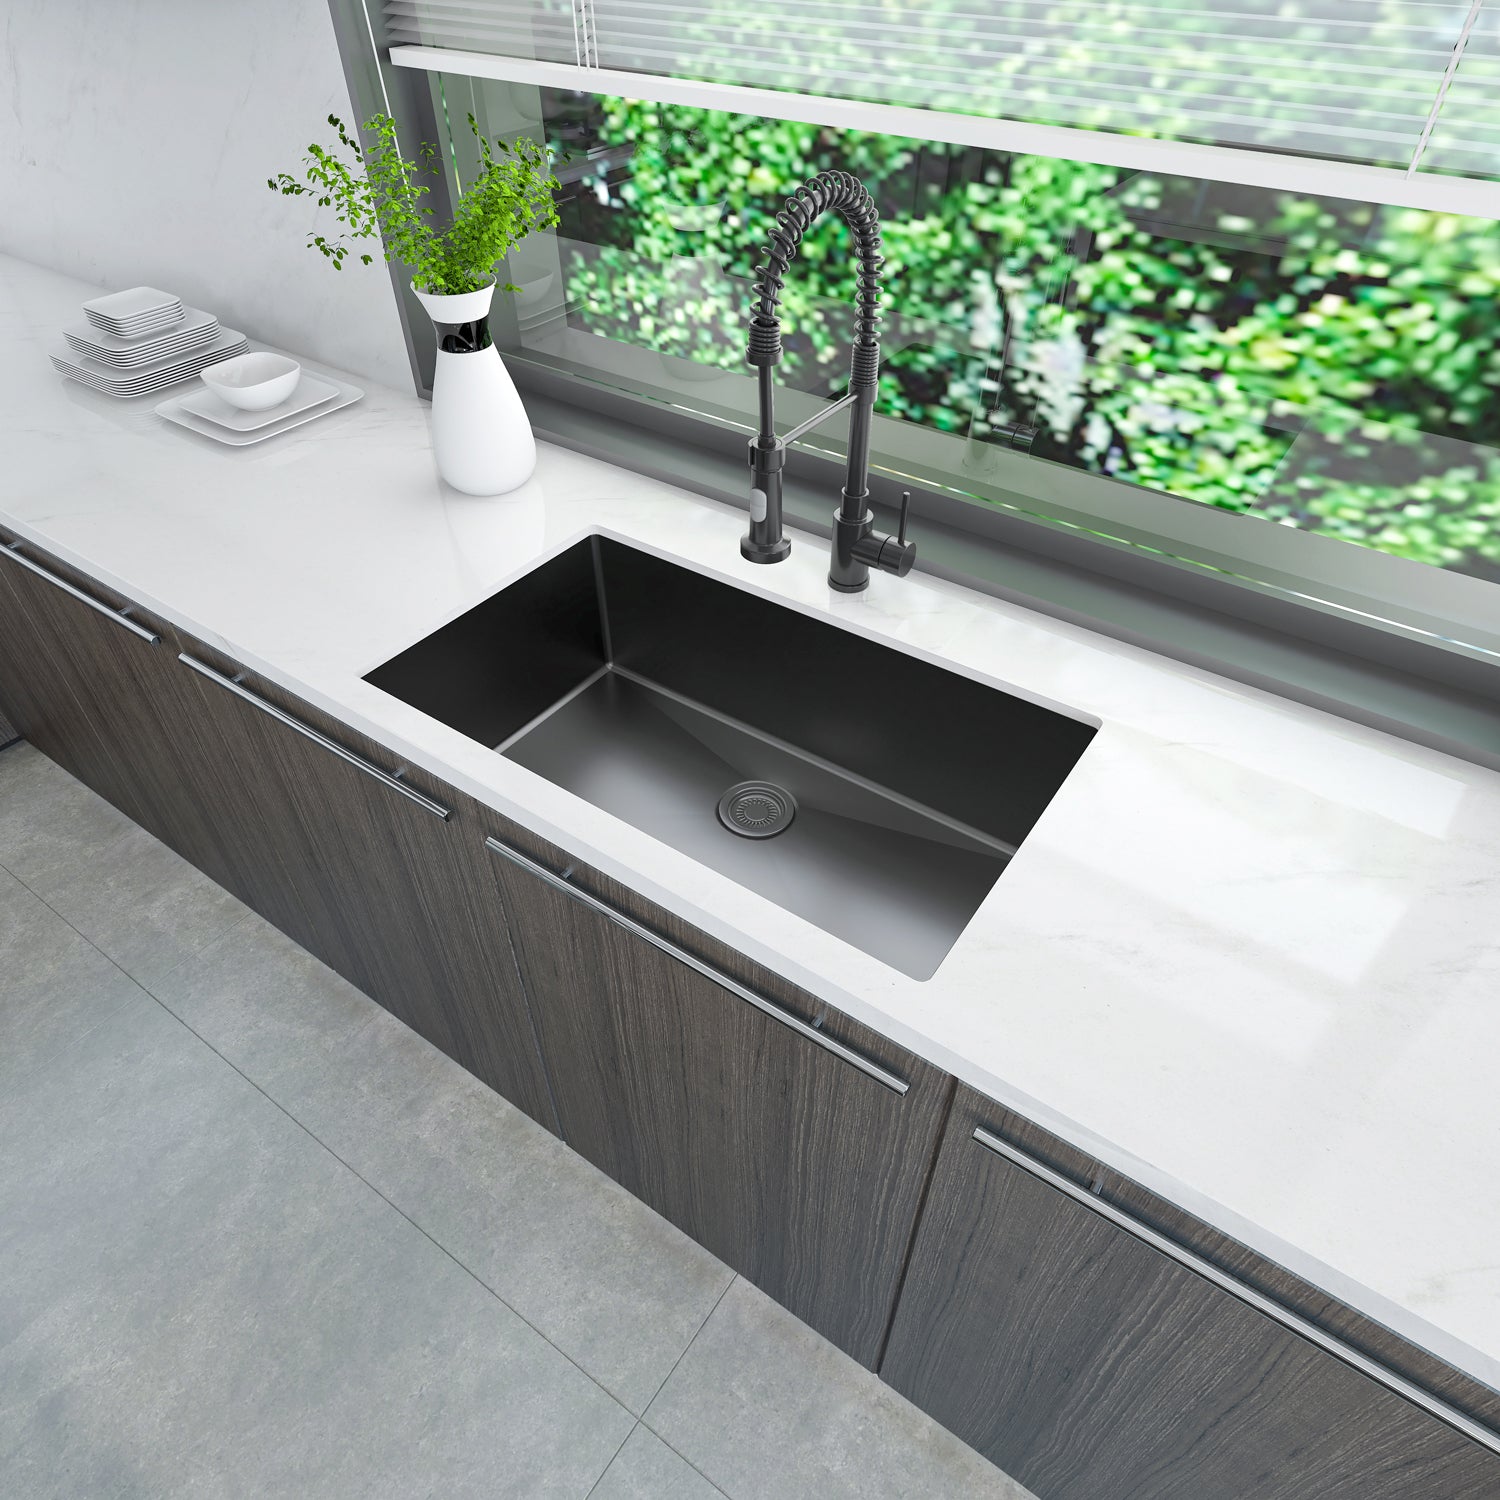 Sinber 32" x 19" x 10" Undermount Single Bowl Kitchen Sink with 18 Gauge 304 Stainless Steel Black Finish HU3219S-B (Sink Only)